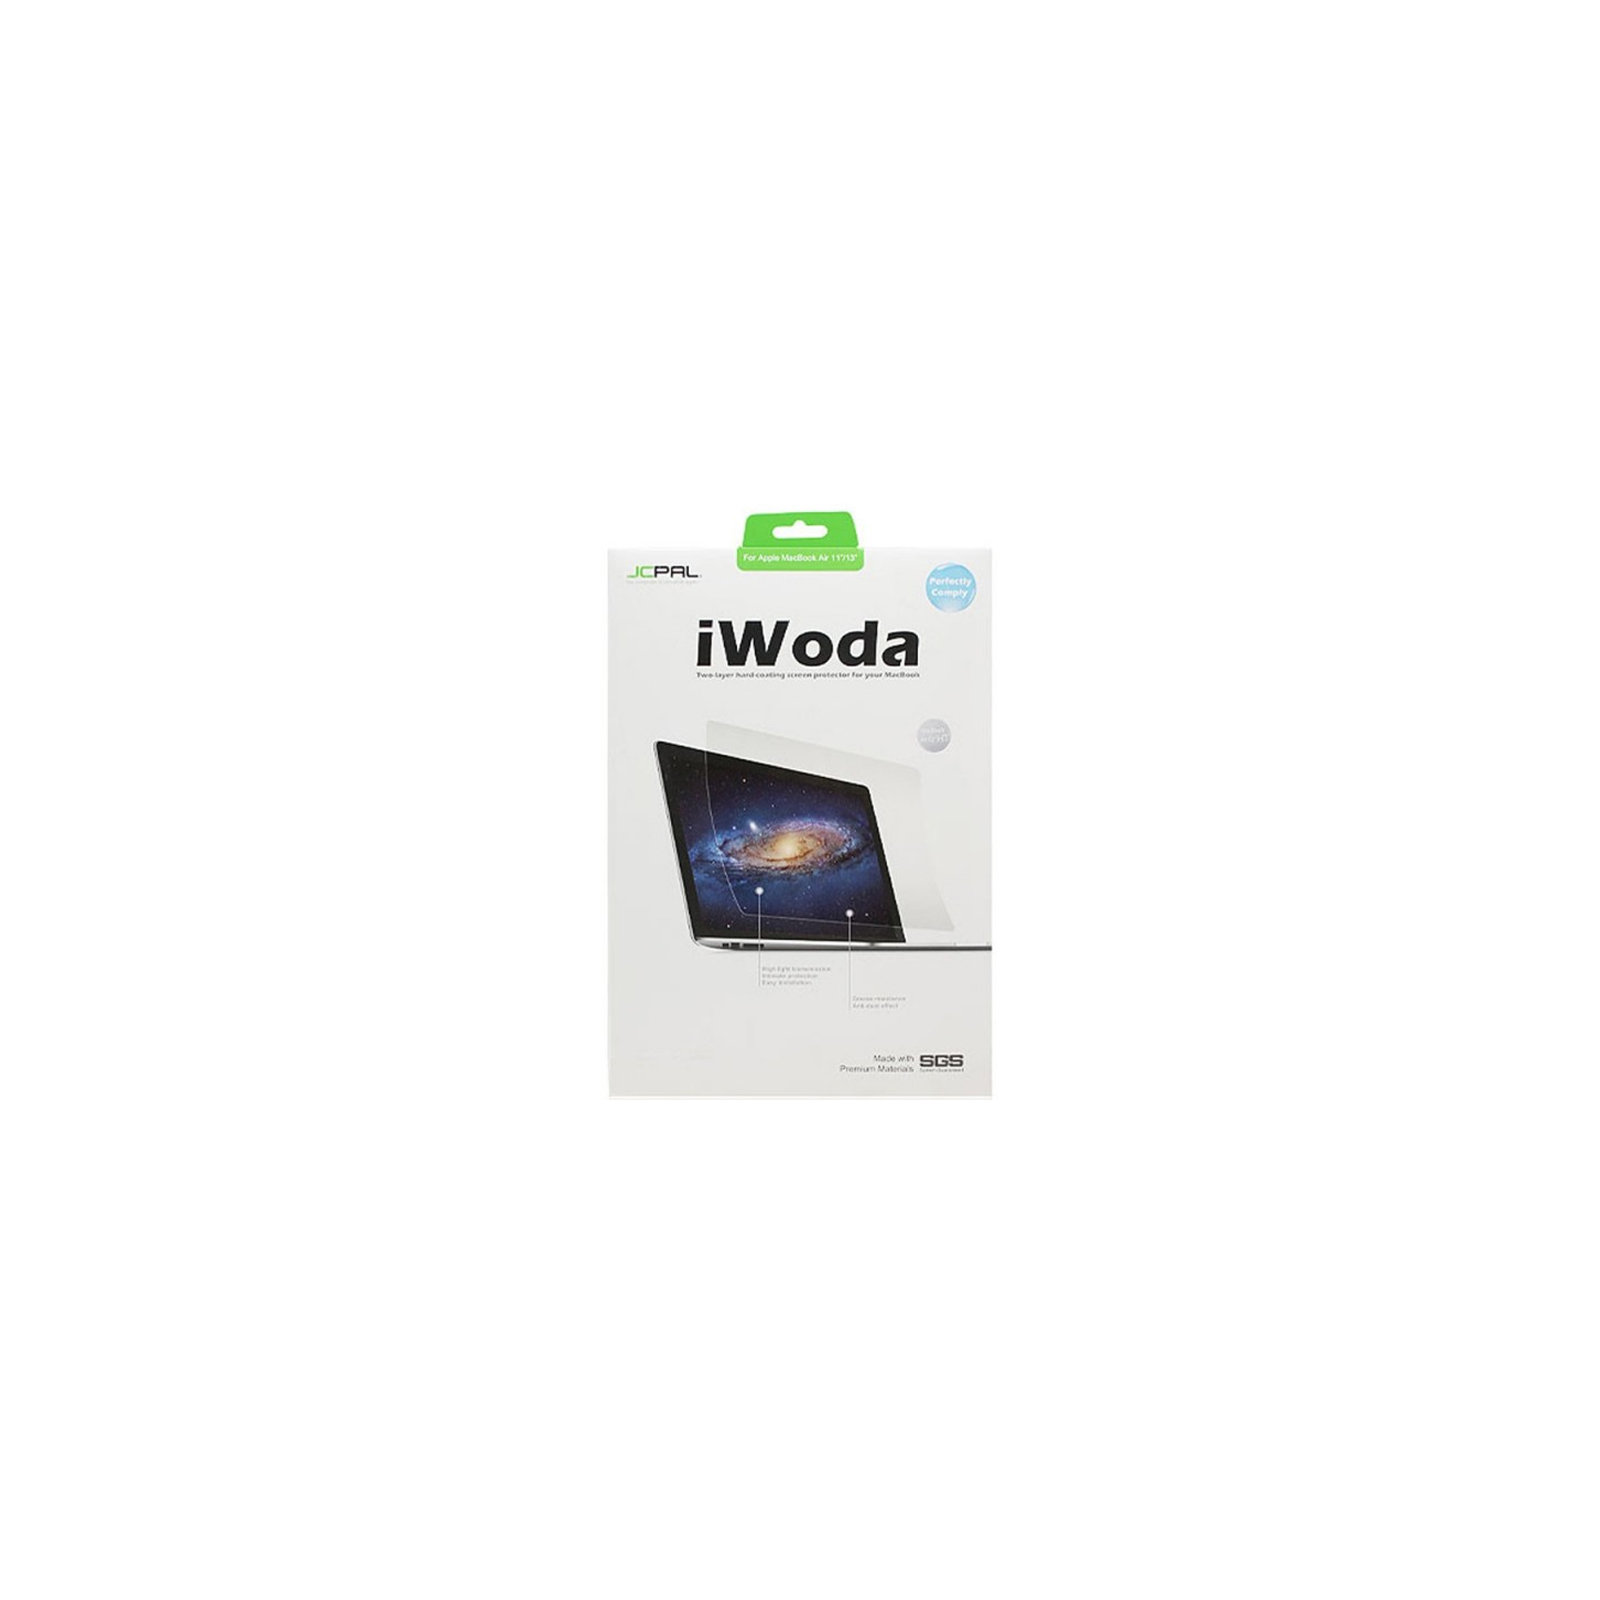 Плівка захисна JCPAL iWoda для MacBook Air 11 (High Transparency) (JCP2009)